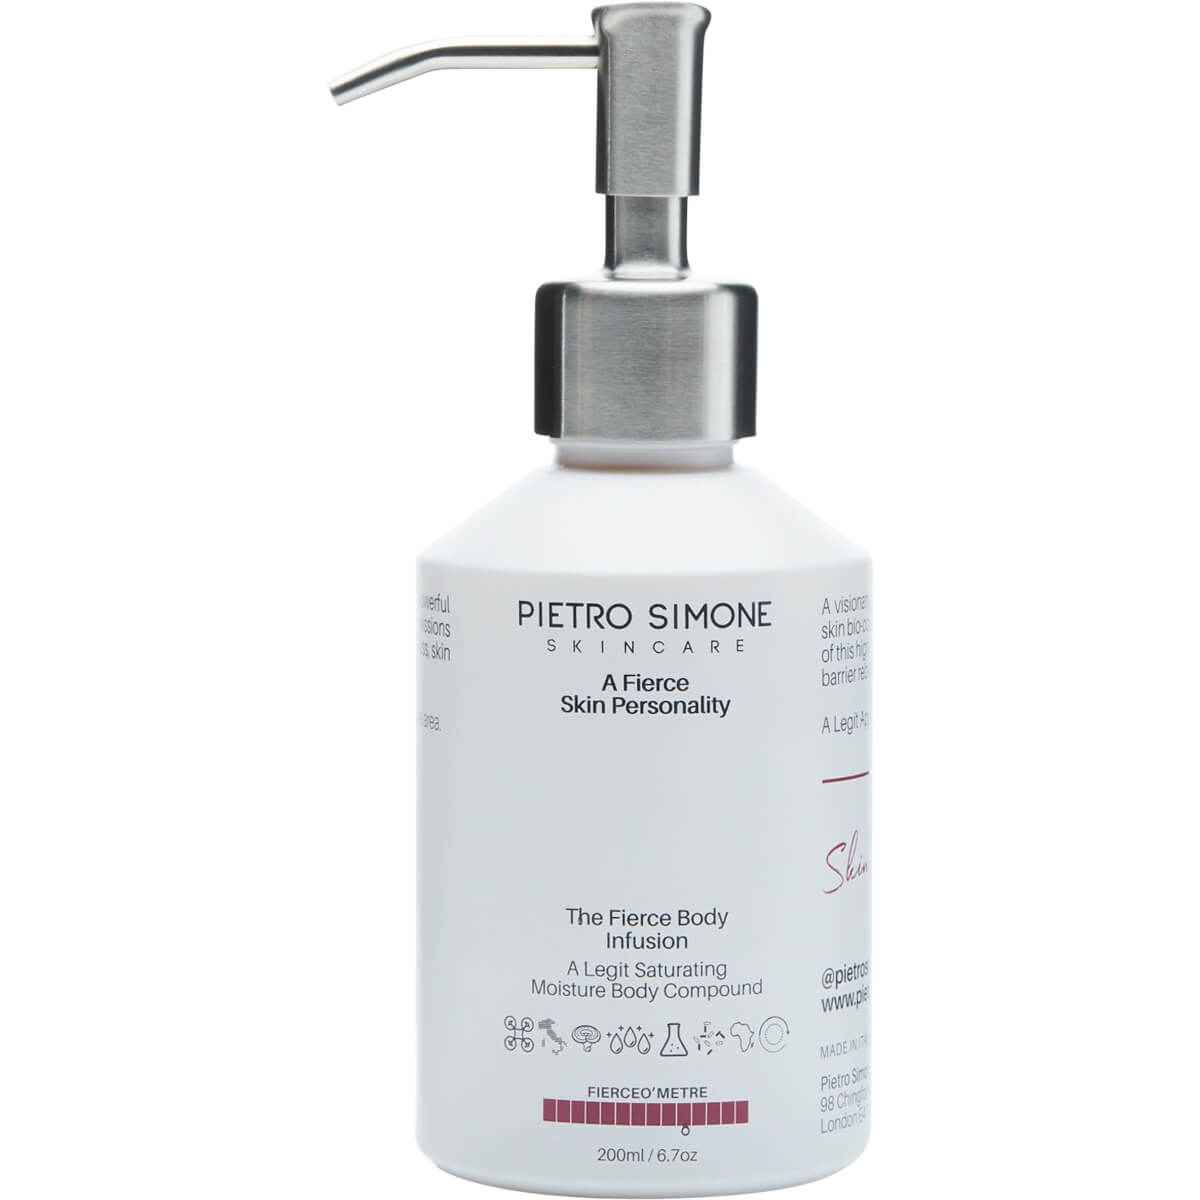 pietro simone the fierce body infusion (200ml)